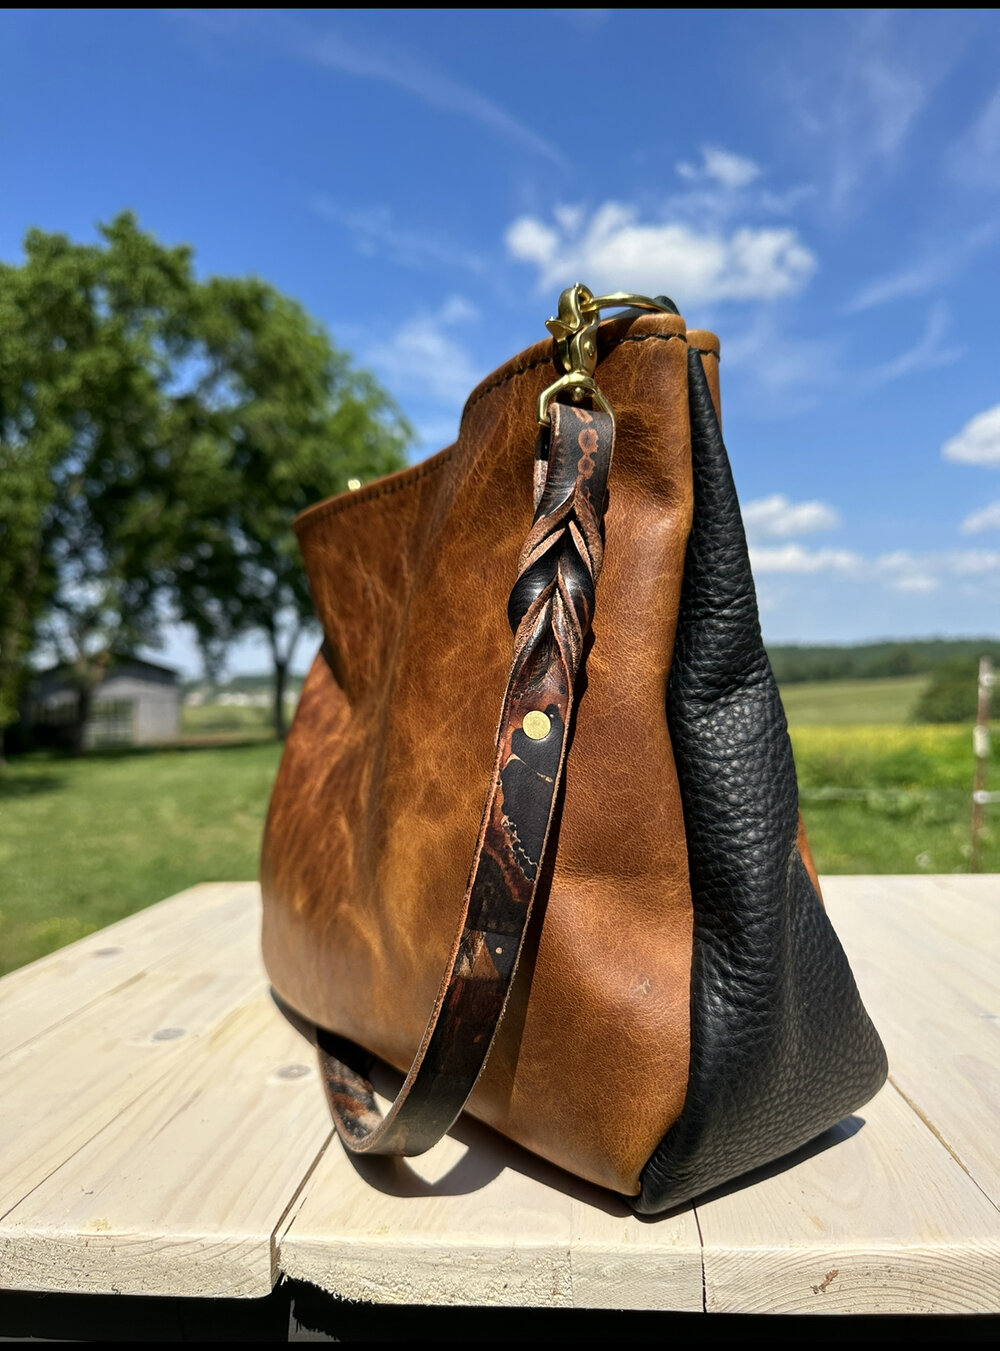  WADORN Leather Purse Strap, 14.6 Inch Short Handbag